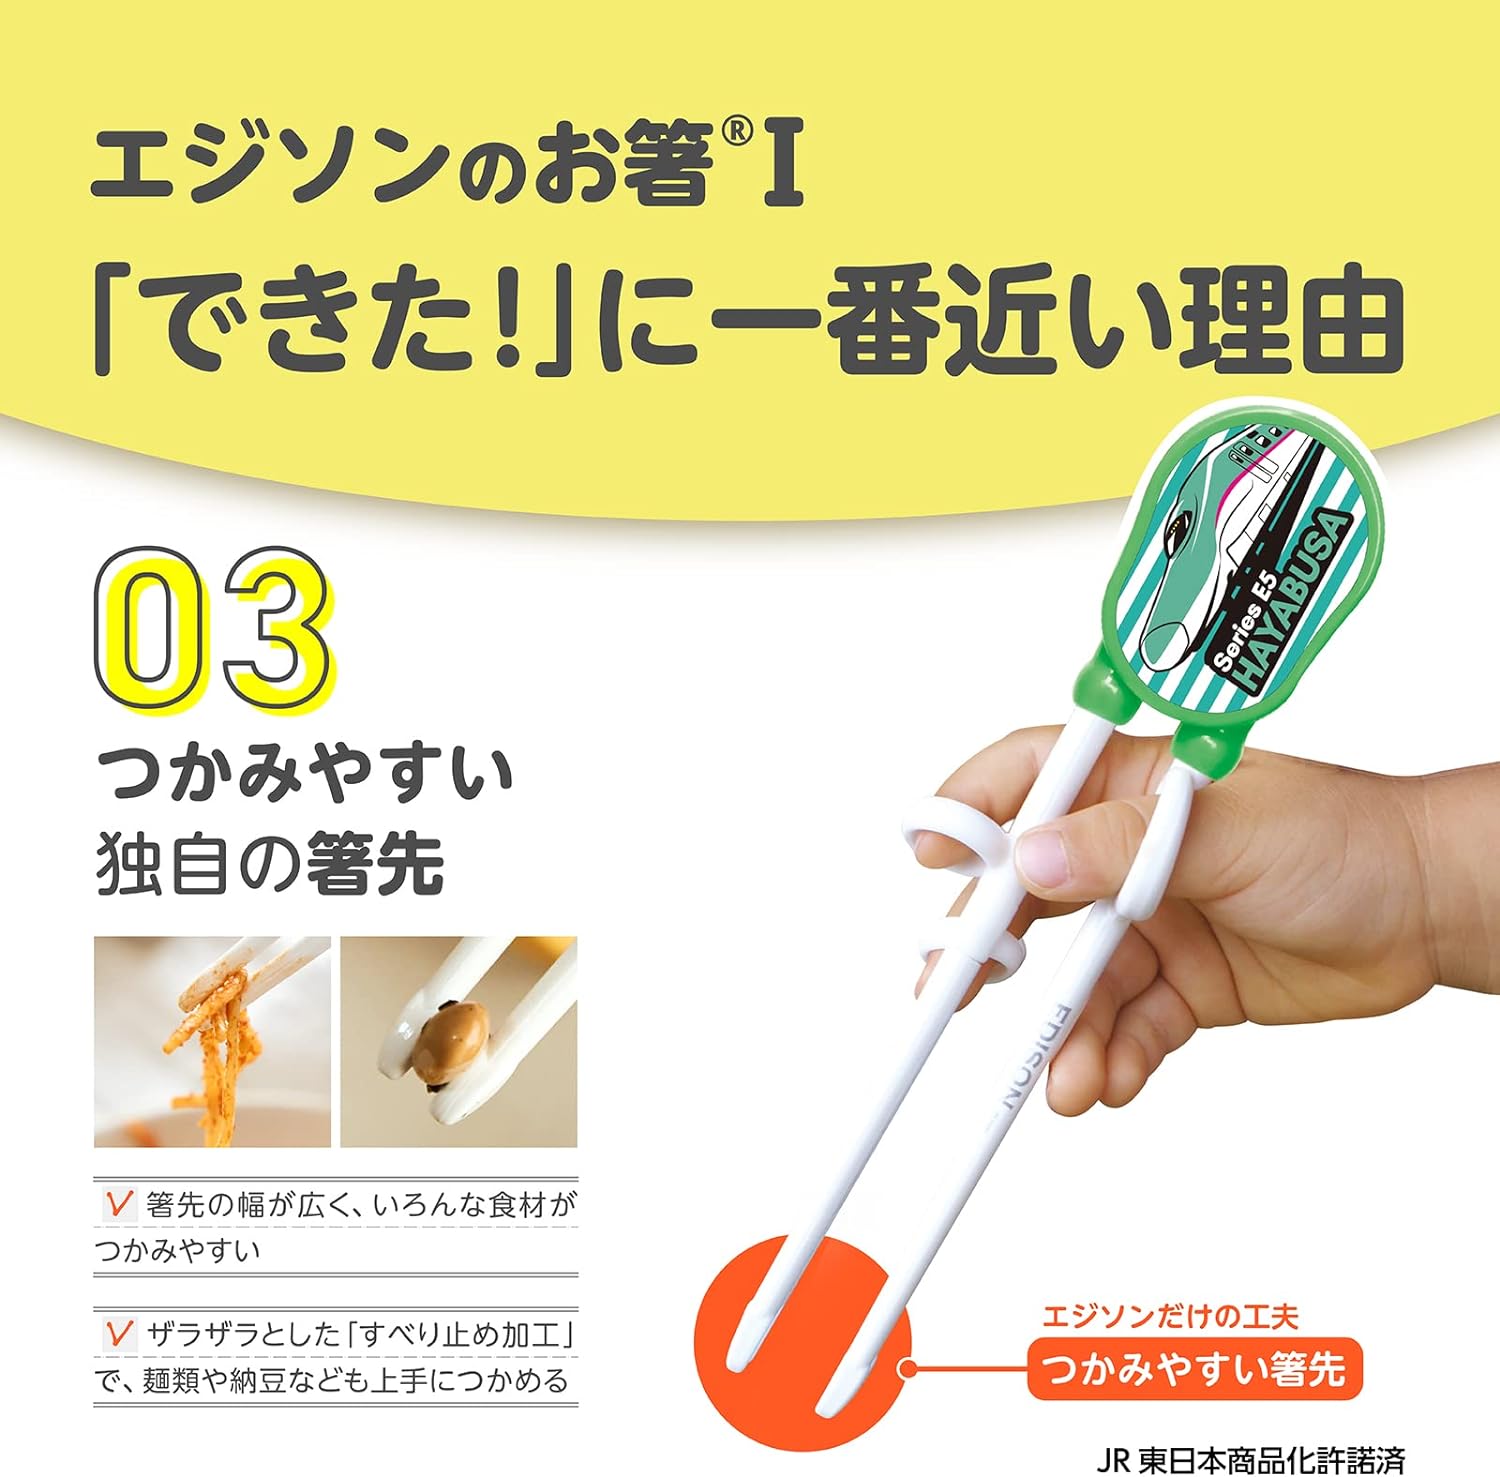 Edison Kids Chopsticks Shinkansen 2yrs 16cm Right Hand